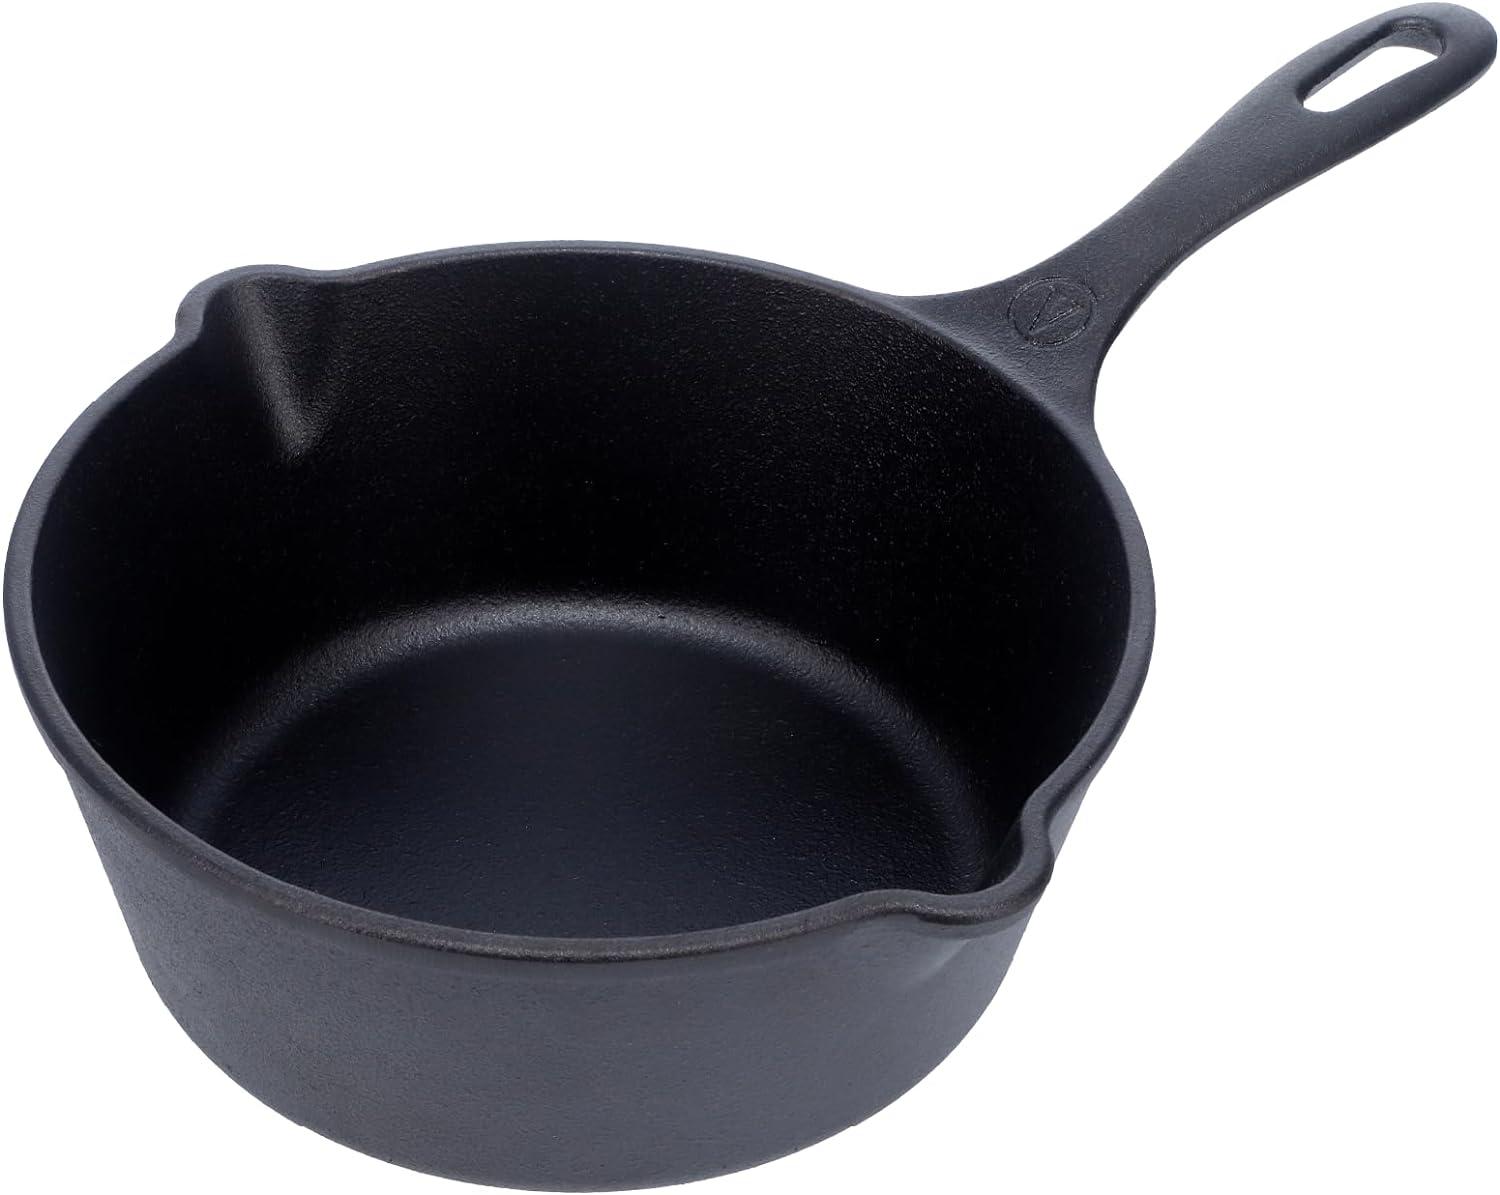 Victoria Cast Iron Melting Pot Saucepan for $14.99